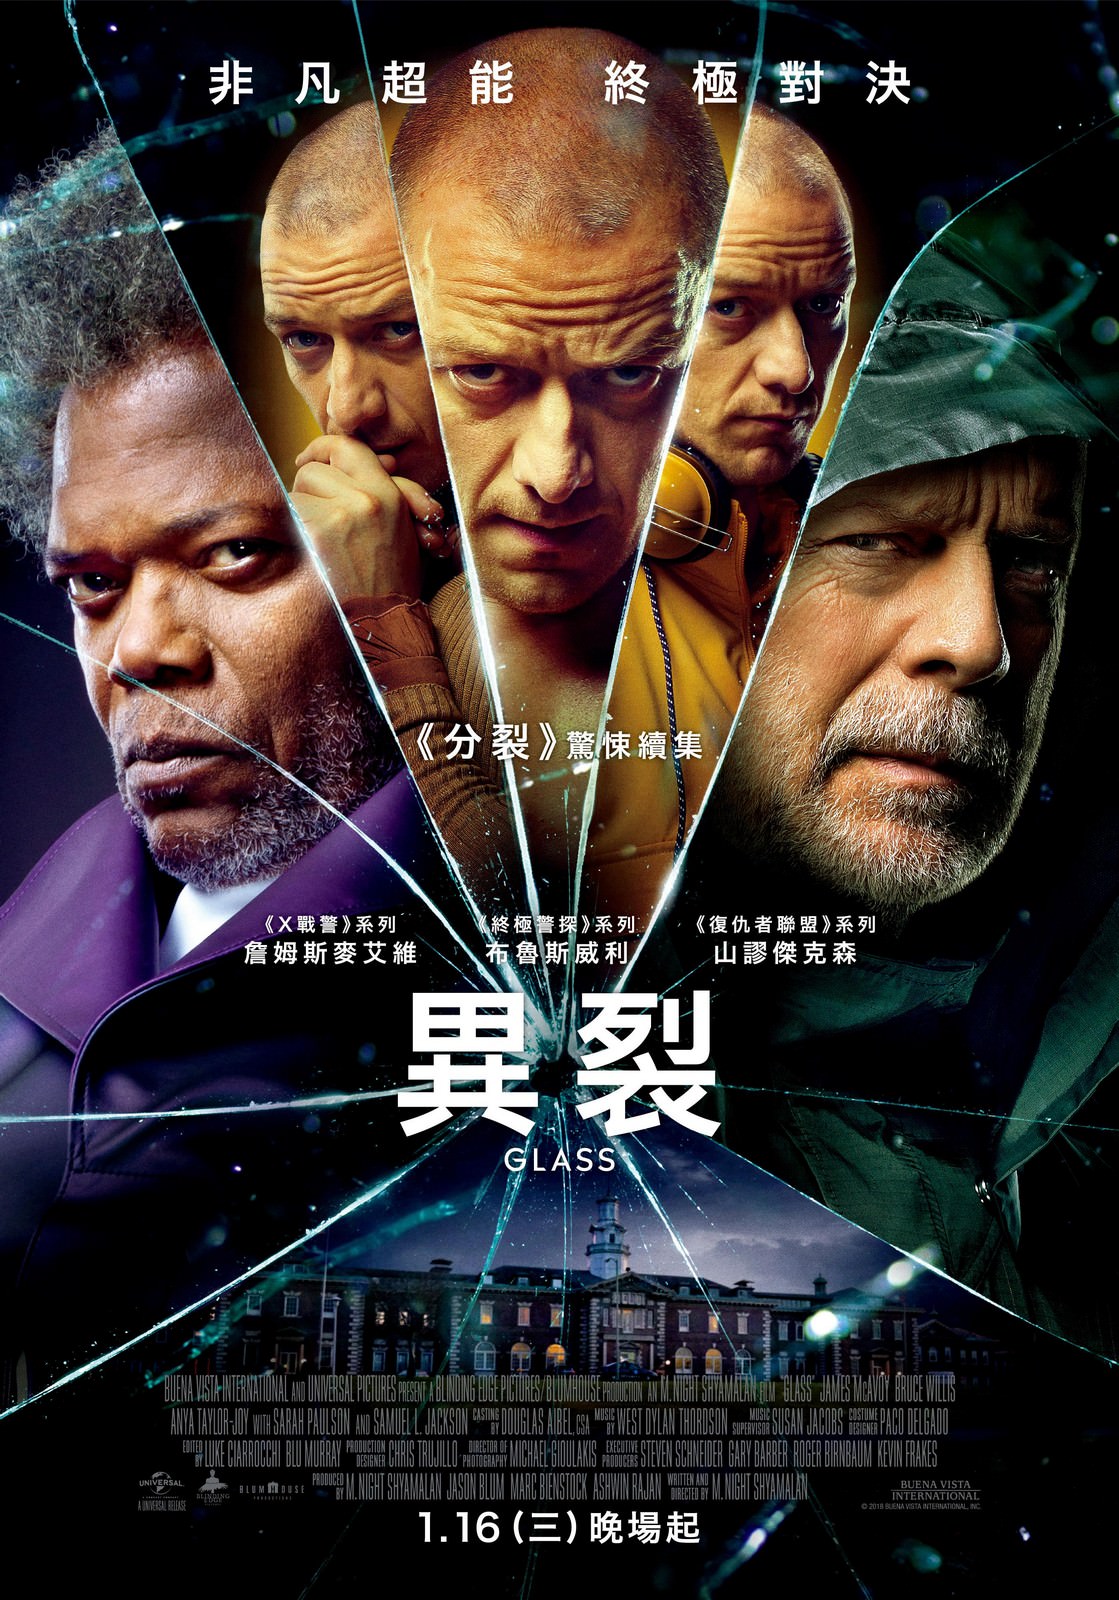 Movie, Glass(美國, 2019年) / 異裂(台灣) / 異能仨(香港) / 玻璃先生(網路), 電影海報, 台灣